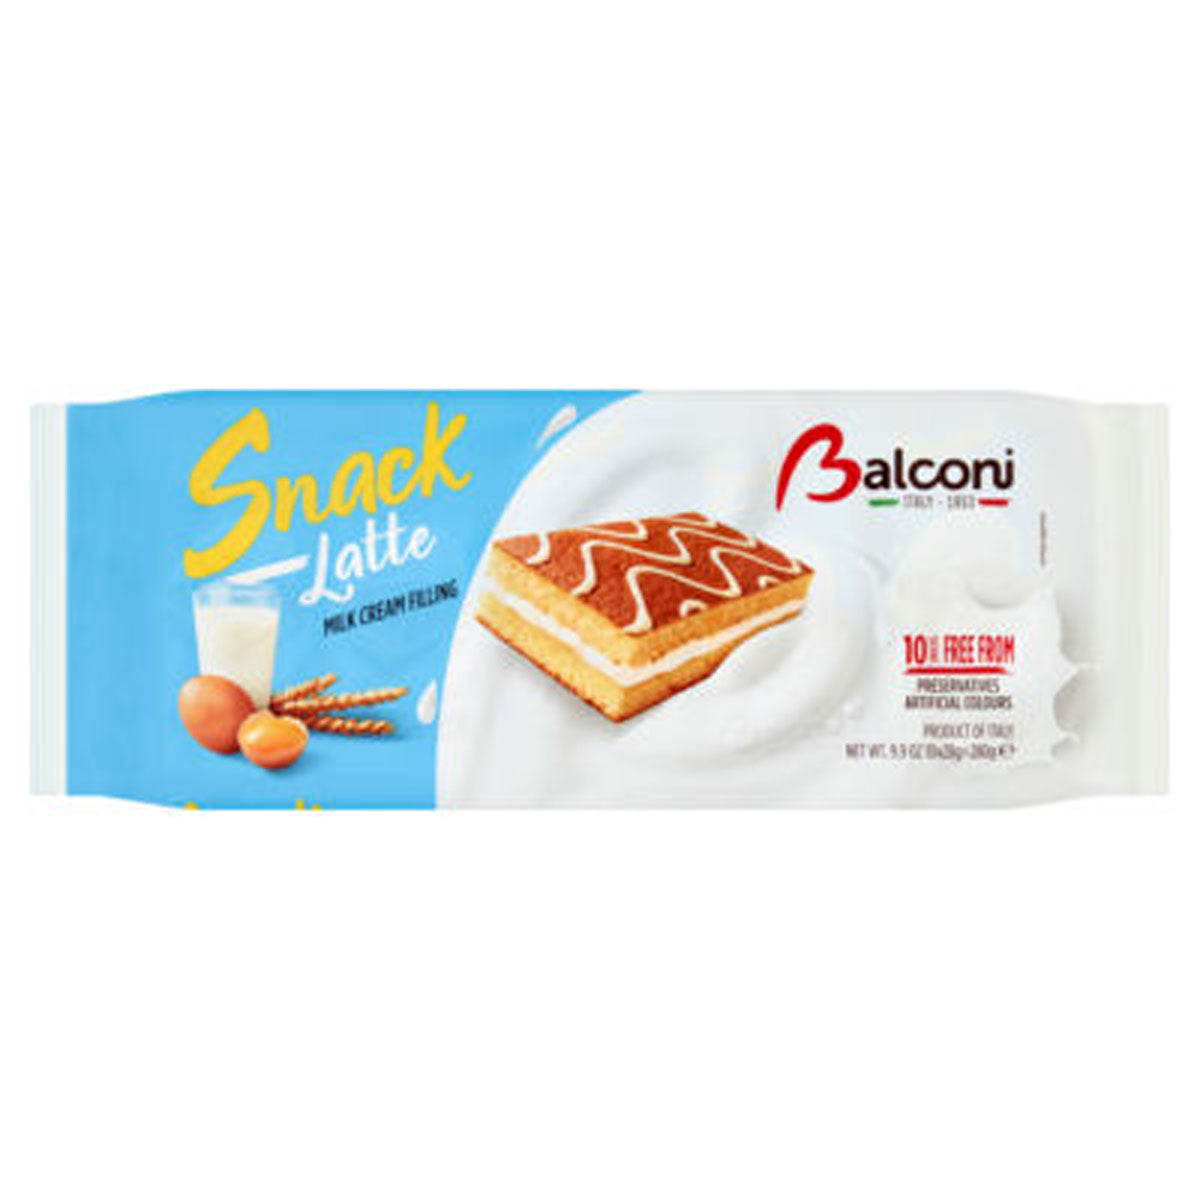 Balconi - Snack al Latte Cakes - 280g - Continental Food Store